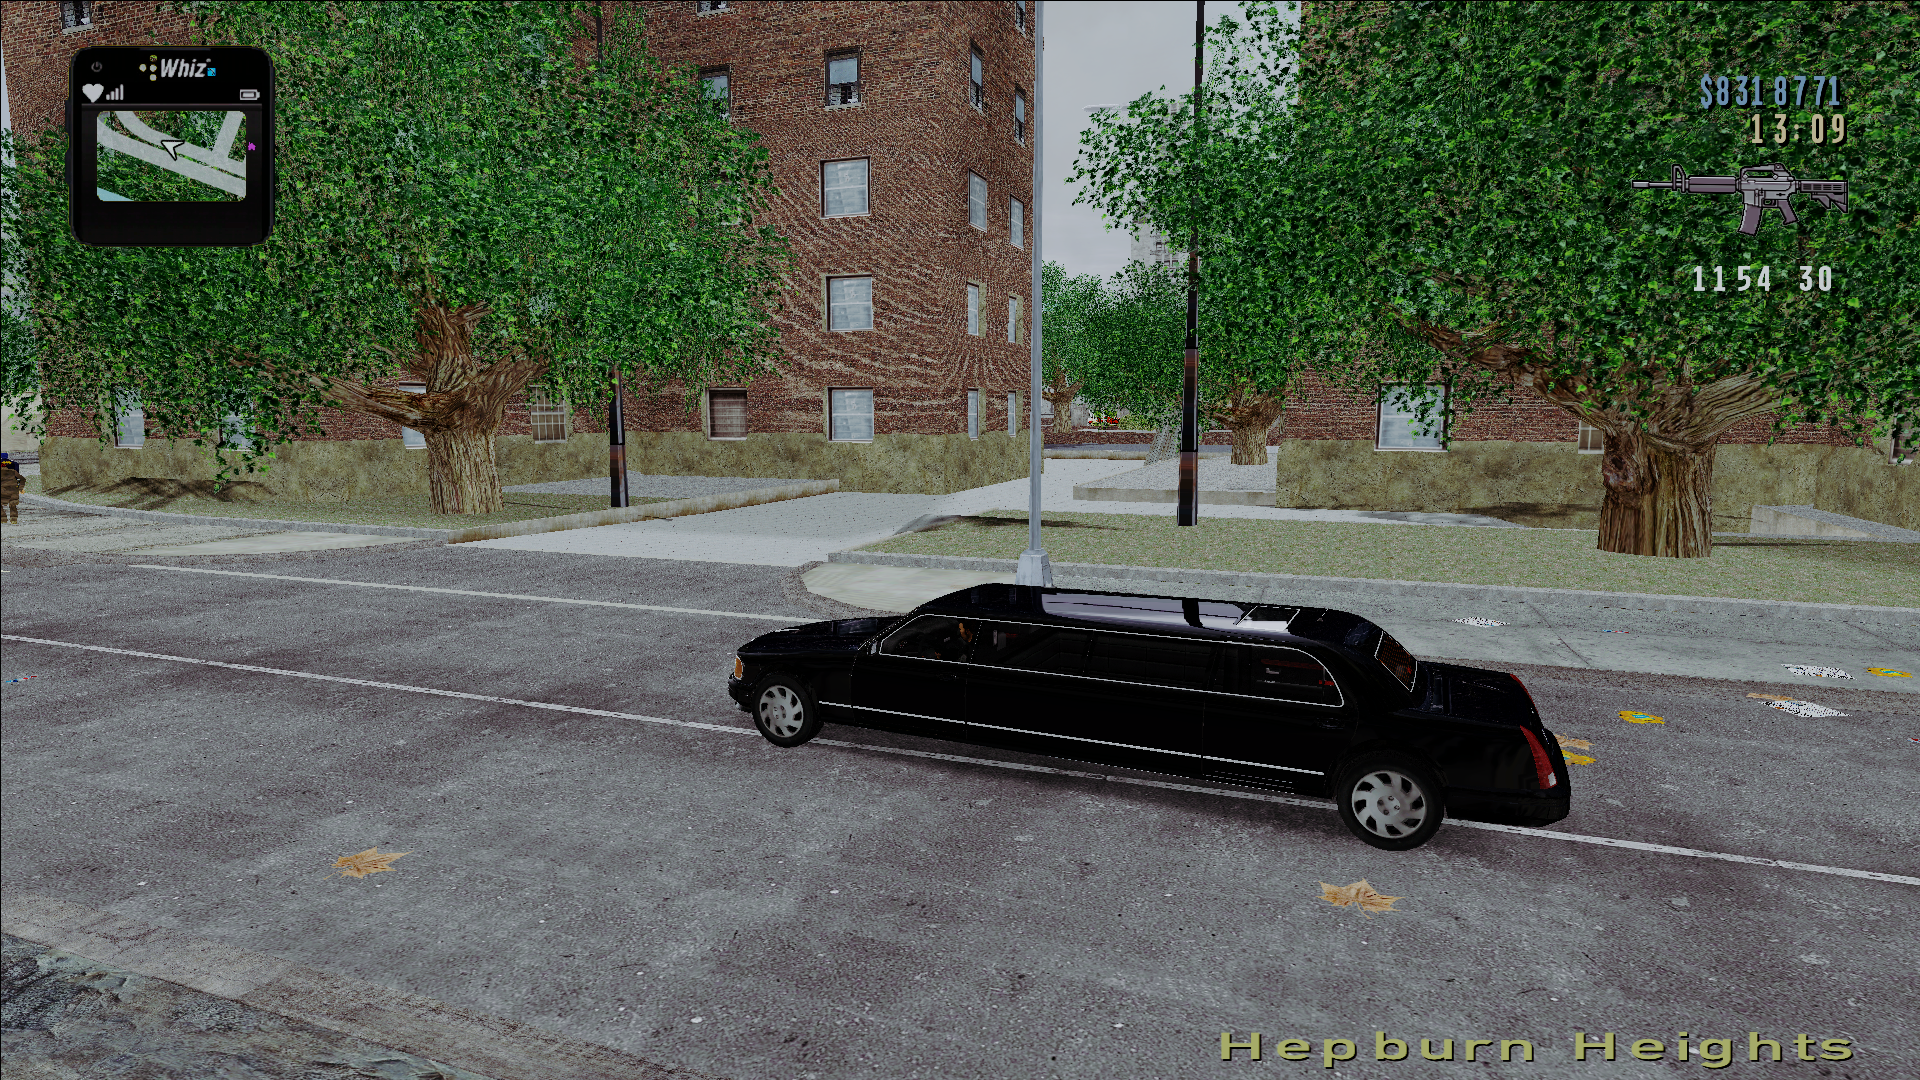 New Hepburn Heights 1 Image Gta Iii Refresh Mod For Grand Theft Auto Iii Moddb 1370